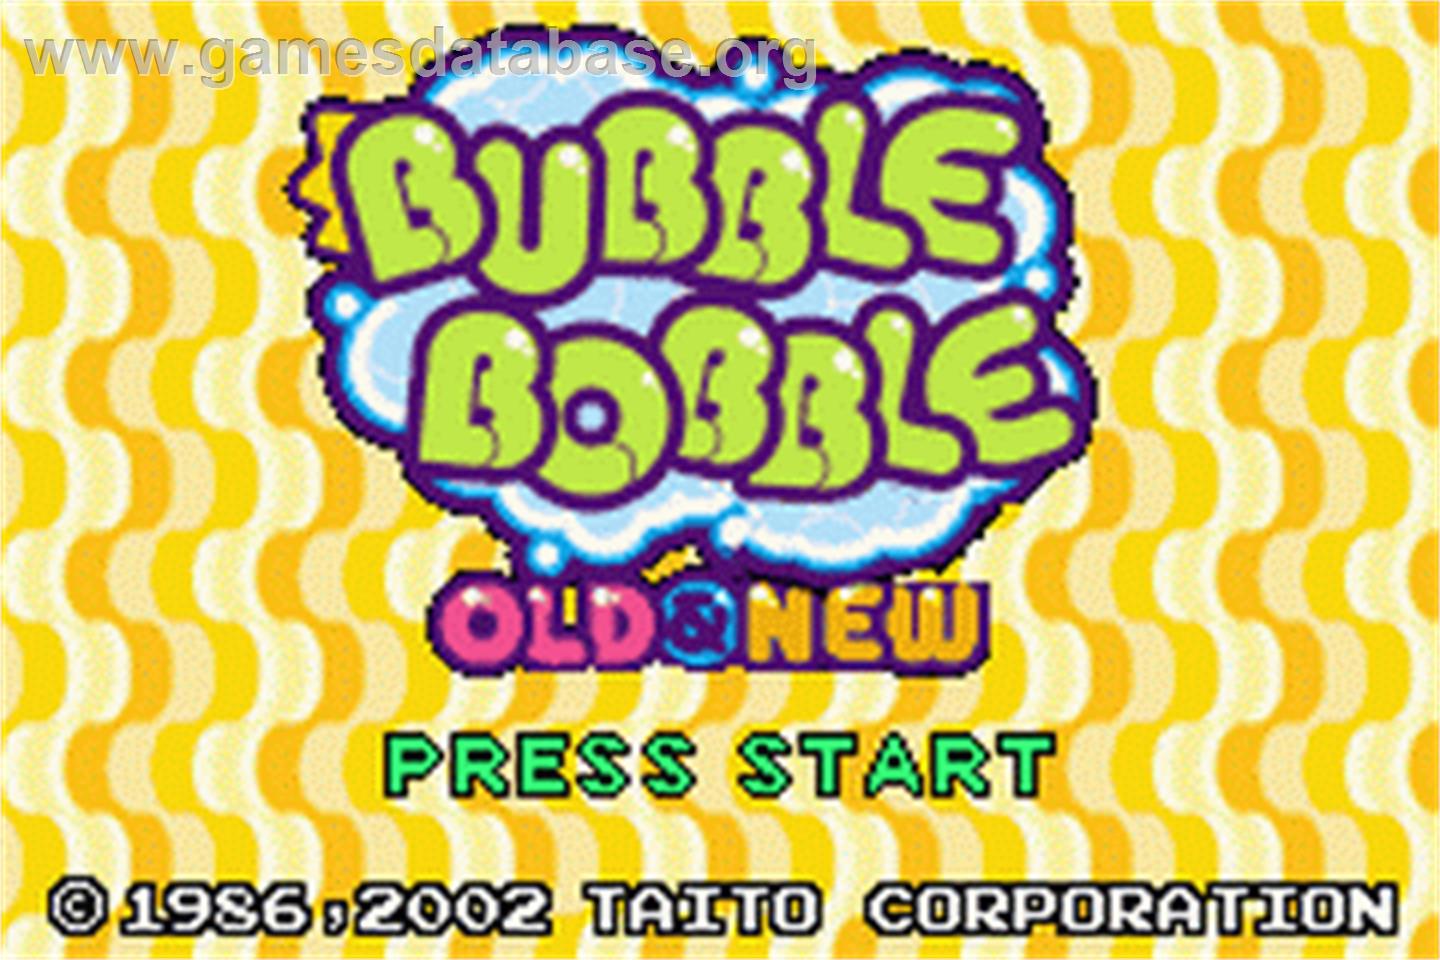 Bubble Bobble Old & New - Nintendo Game Boy Advance - Artwork - Title Screen